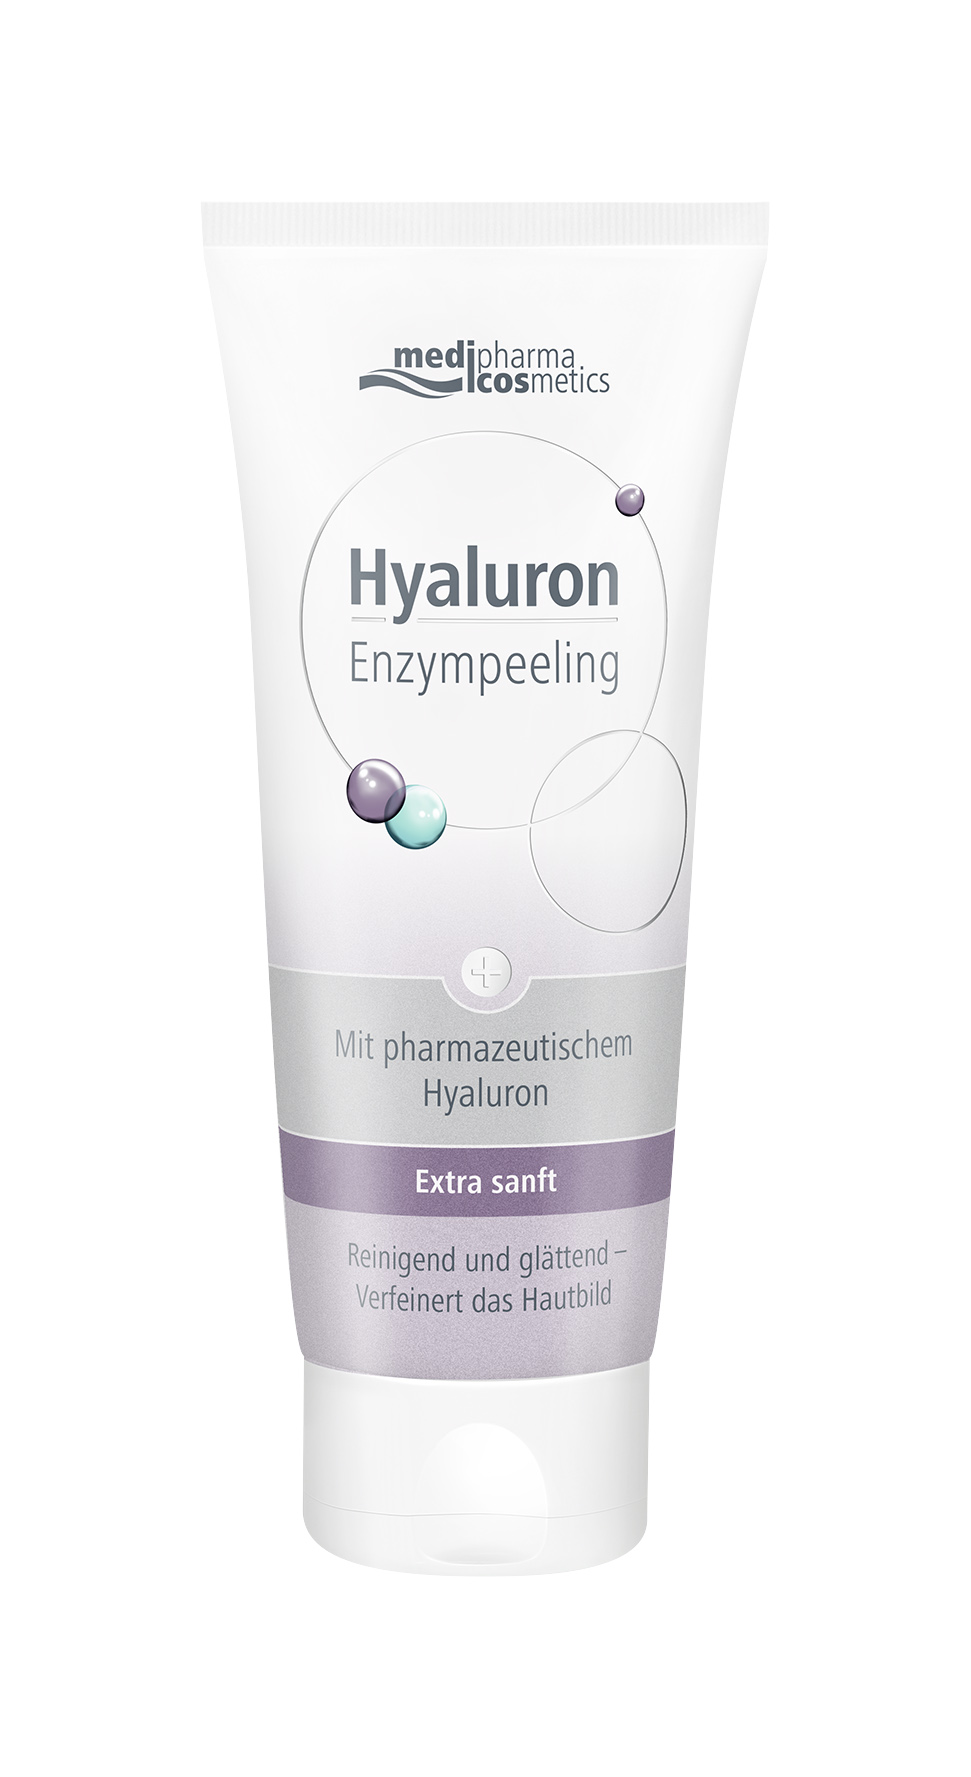 medipharma-cosmetics-Hyaluron-Enzympeeling-Tube